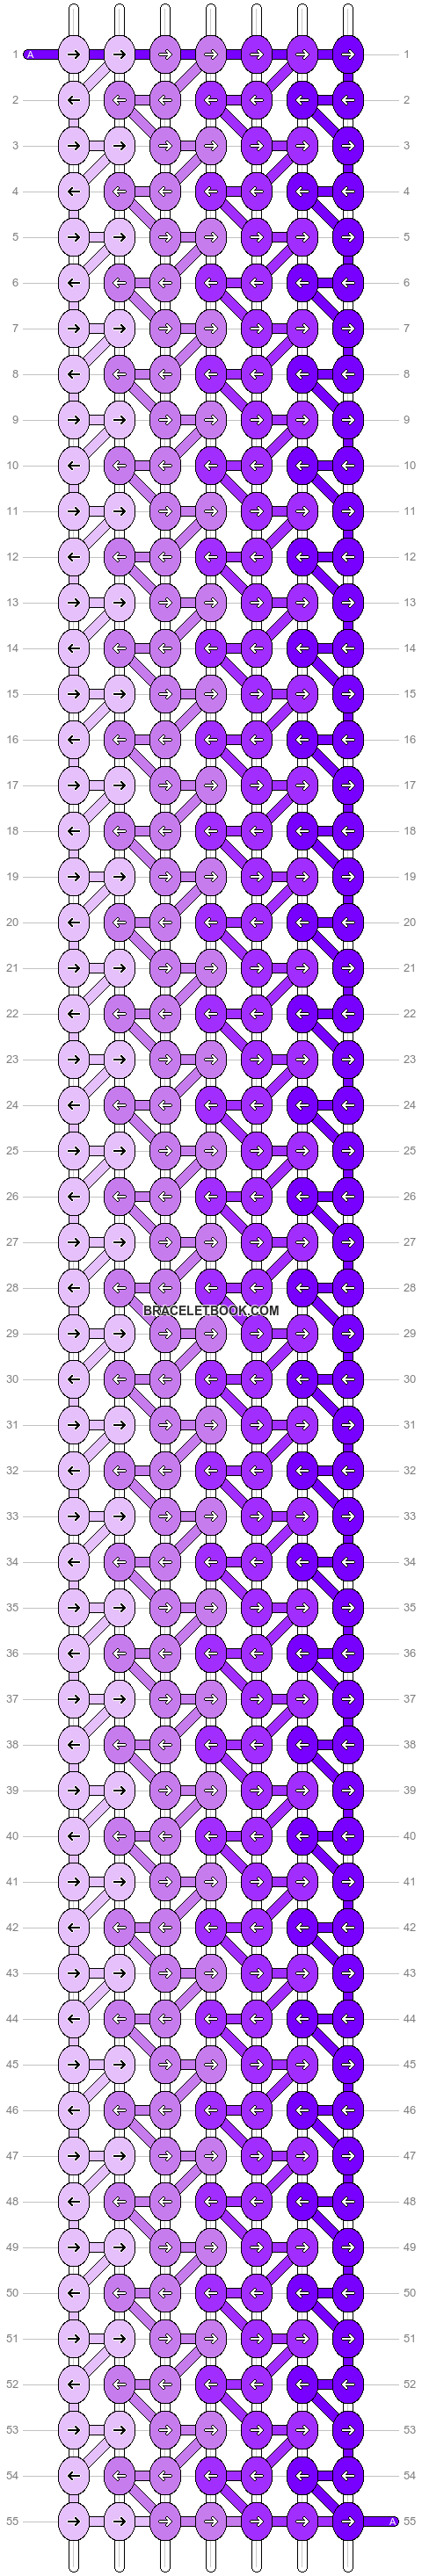 Alpha pattern #15230 variation #299240 pattern